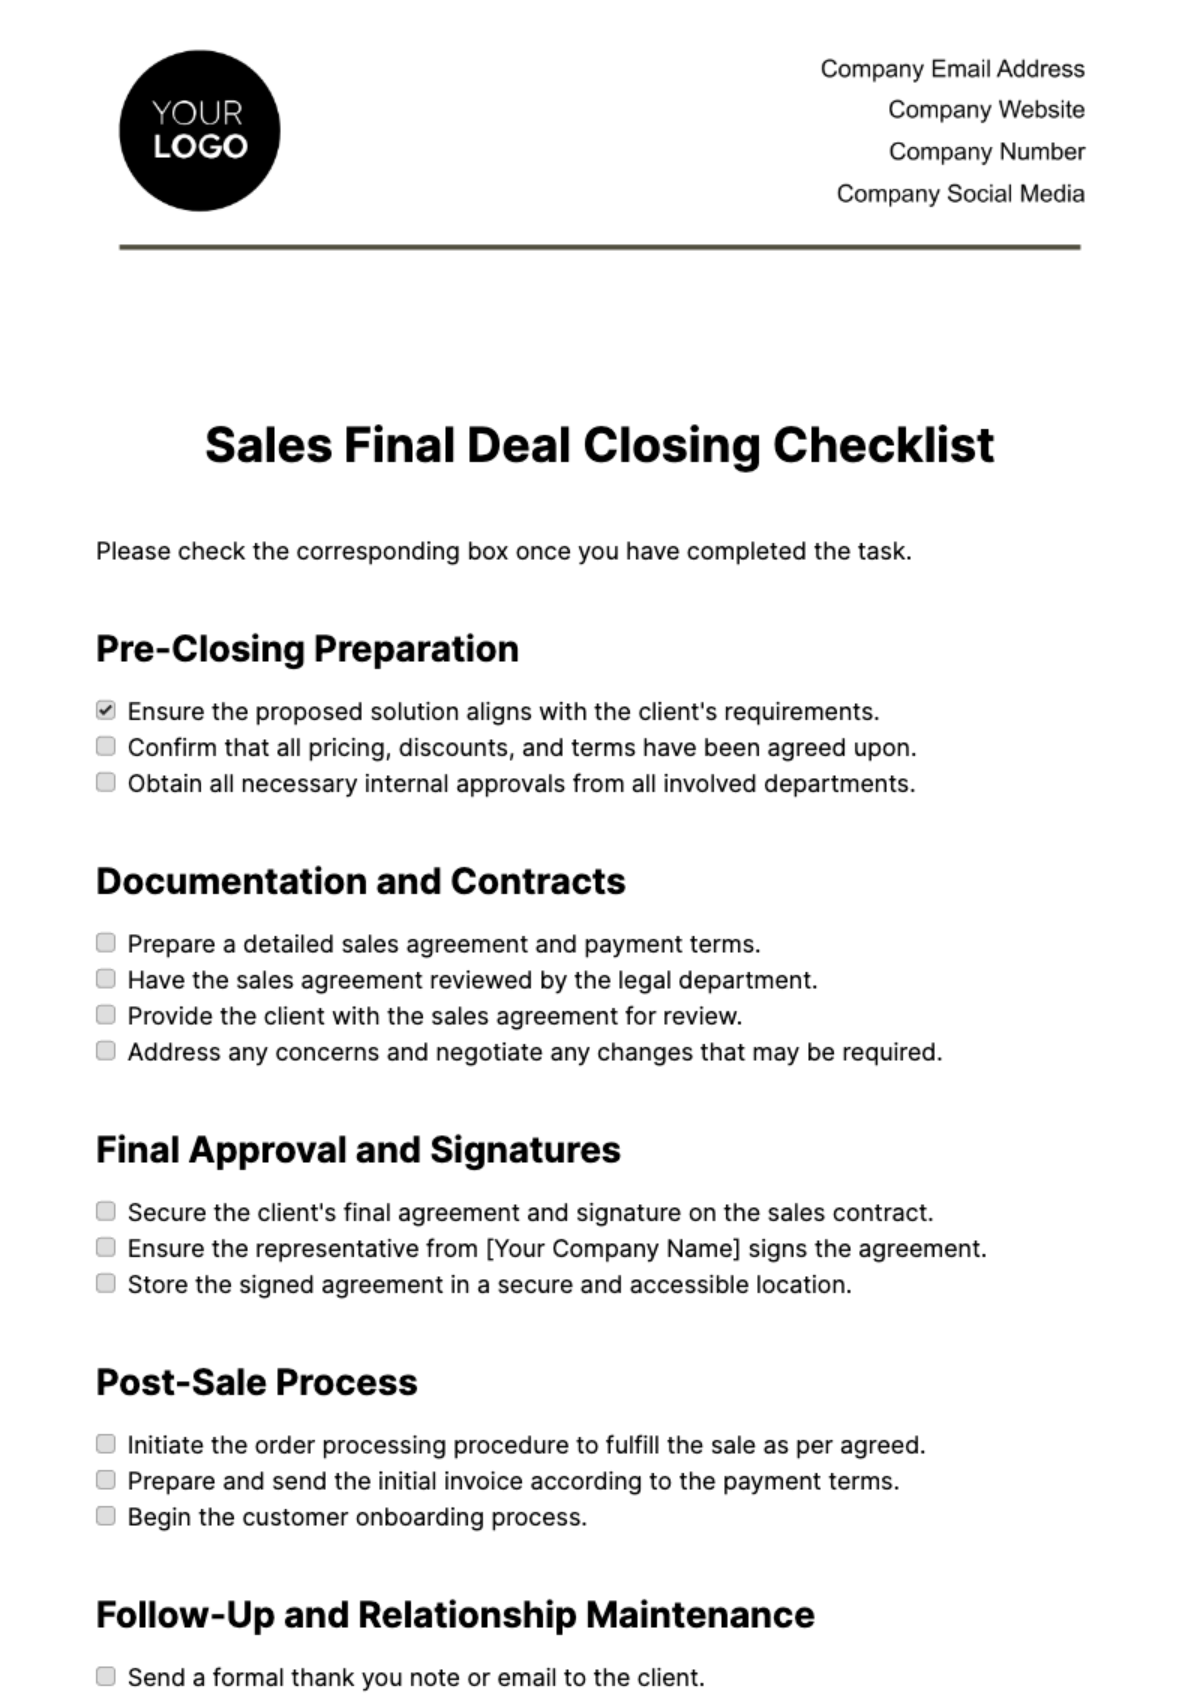 Free Sales Final Deal Closing Checklist Template